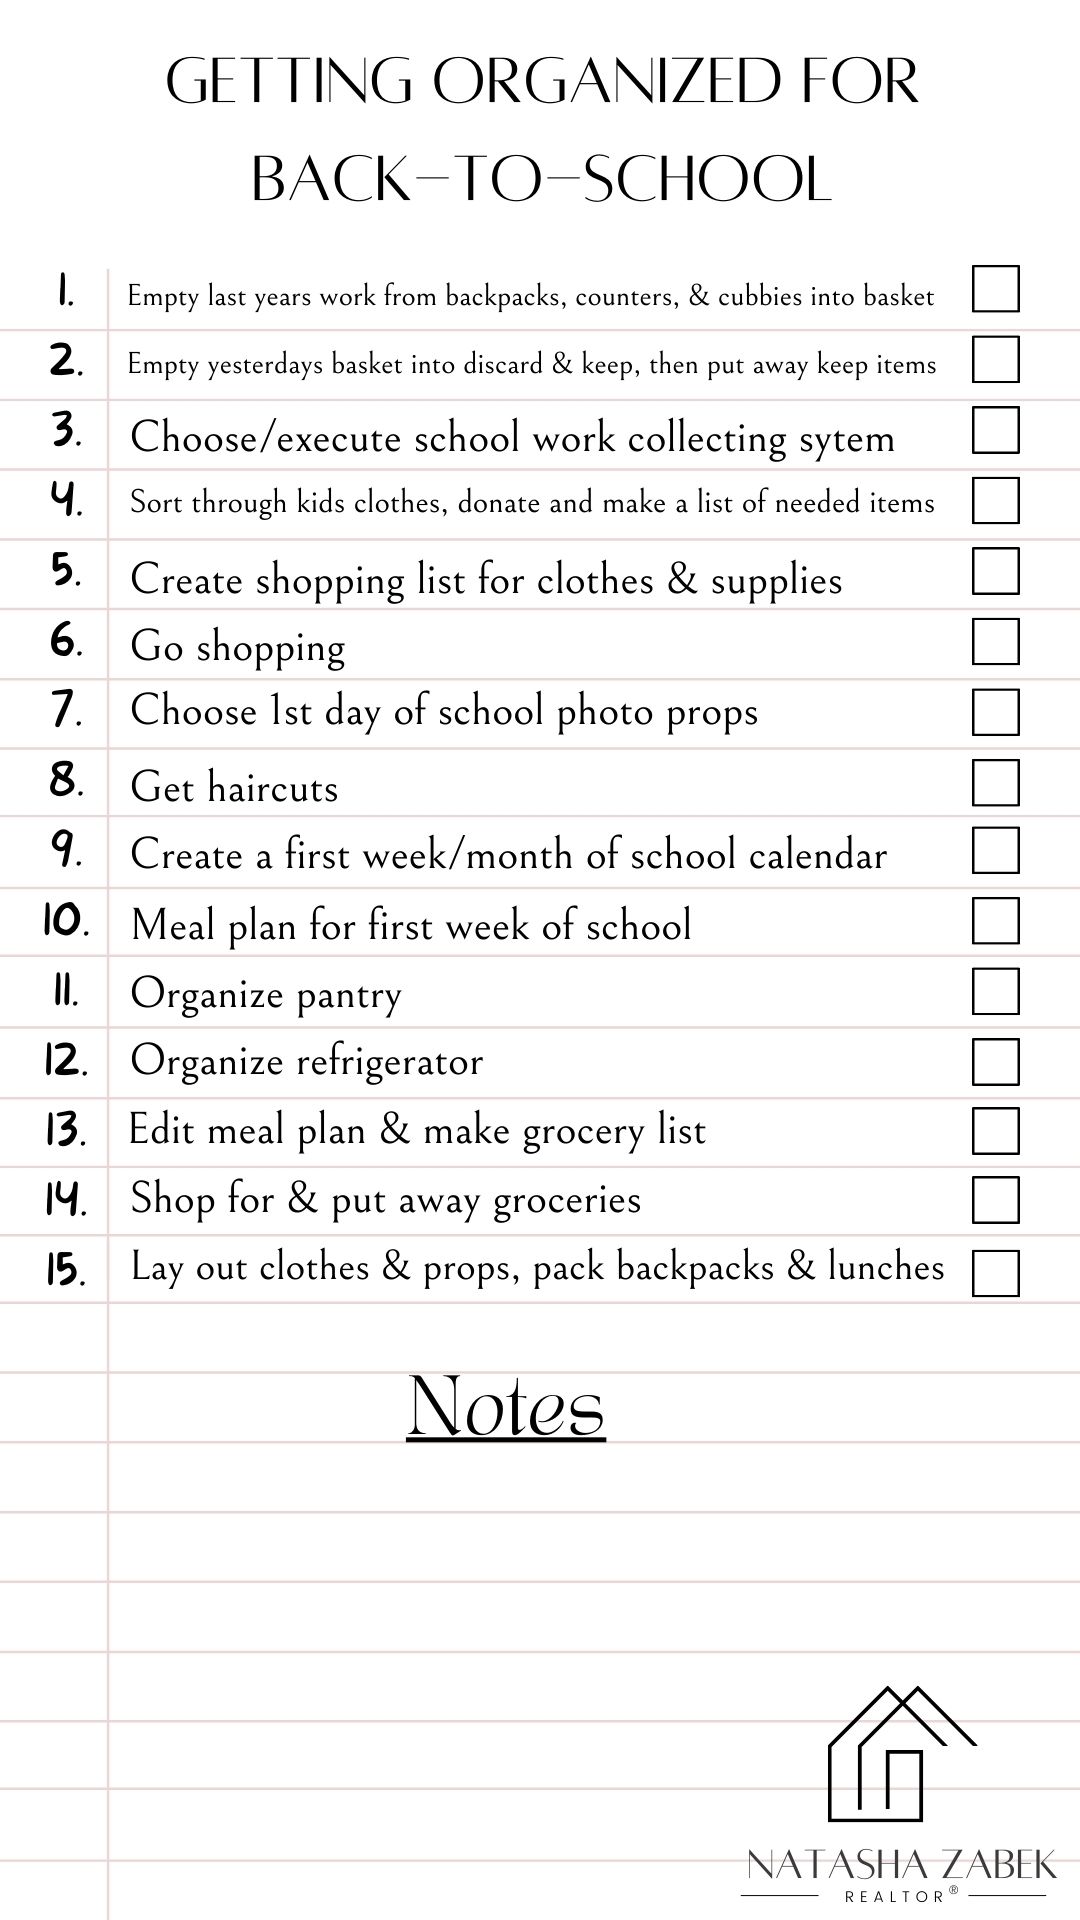 Back-to-school list